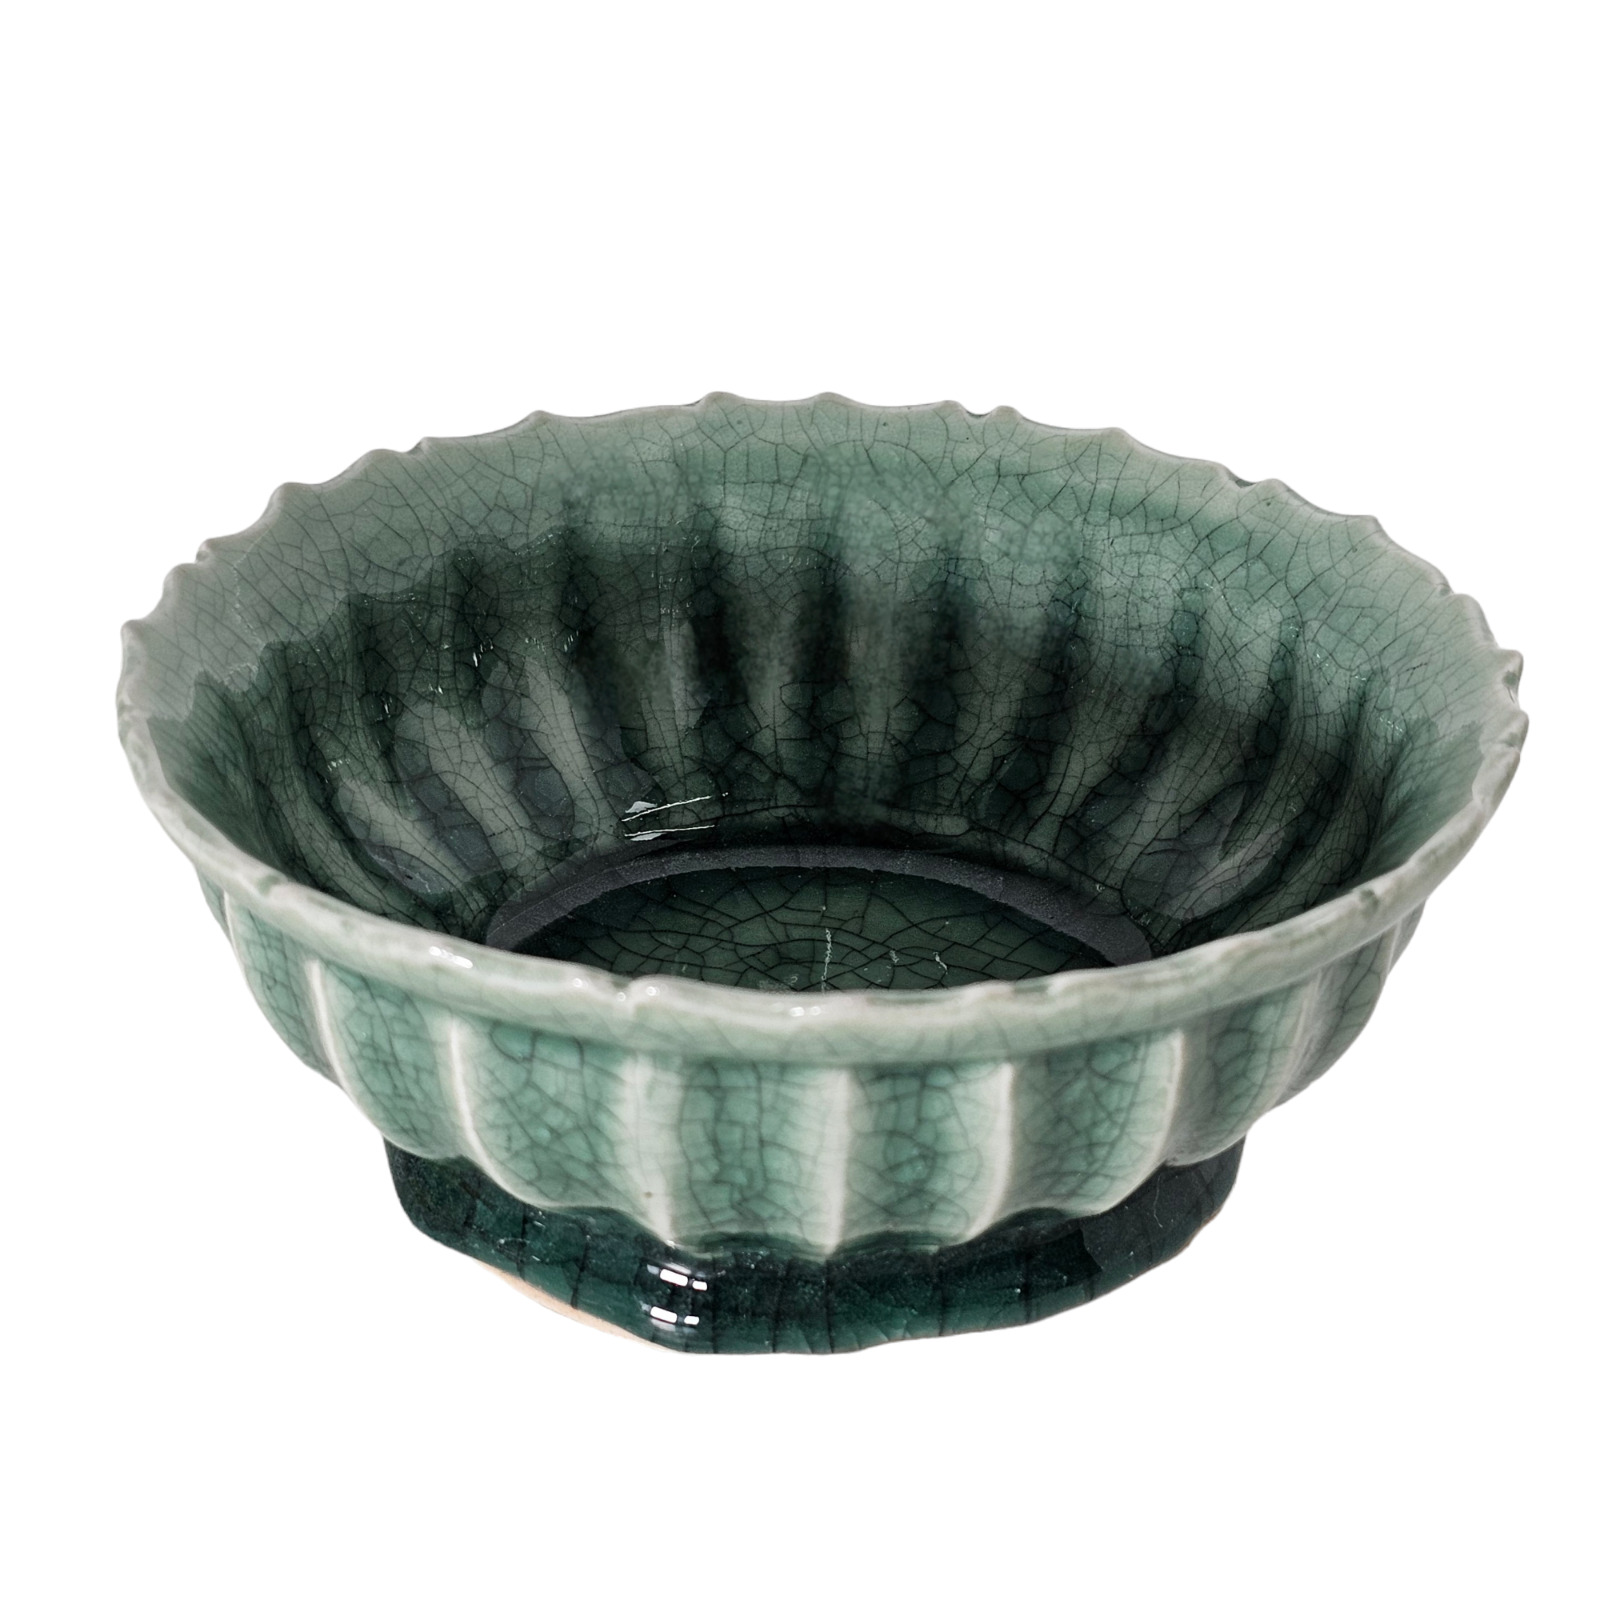 Vintage Chinese Celadon Crackled Scalloped Bowl Green Ceramic China